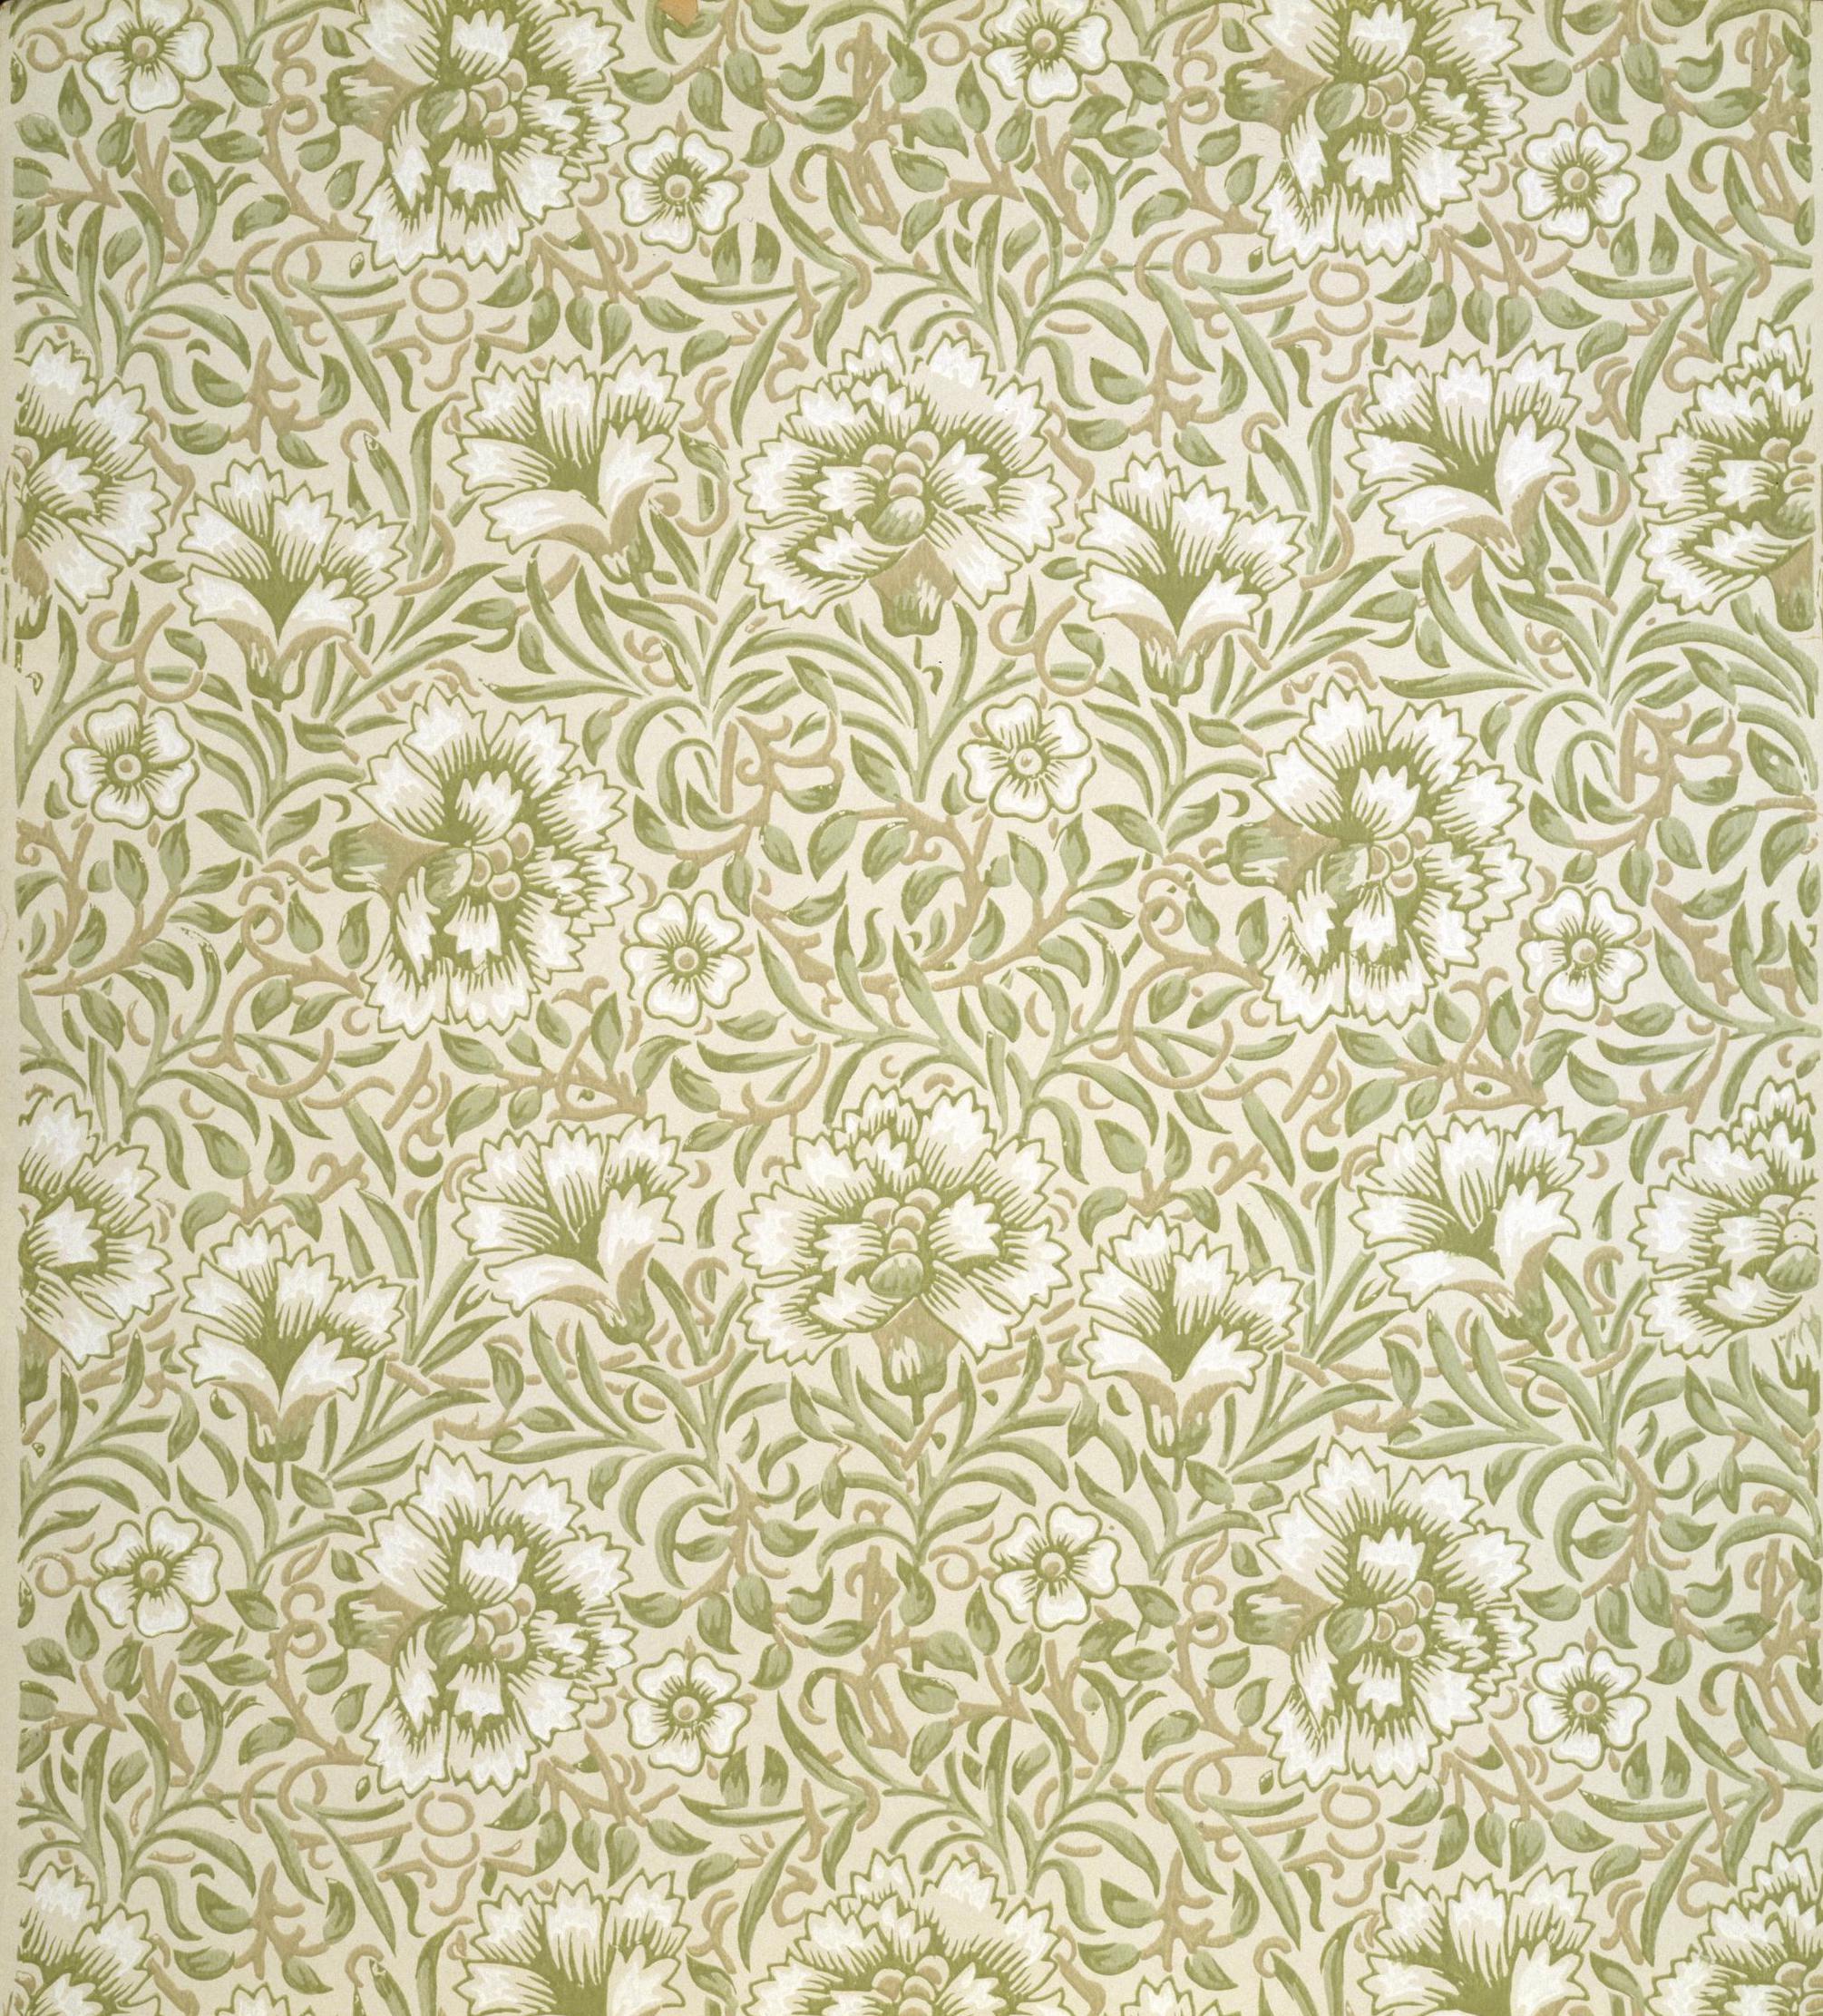 Every Morris on Twitter: "Pattern Kate "Carnation", wallpaper, 1880. Roller-printed at Jeffrey &amp; Co. Image: V&amp;A. https://t.co/2b19uBxeDz" Twitter